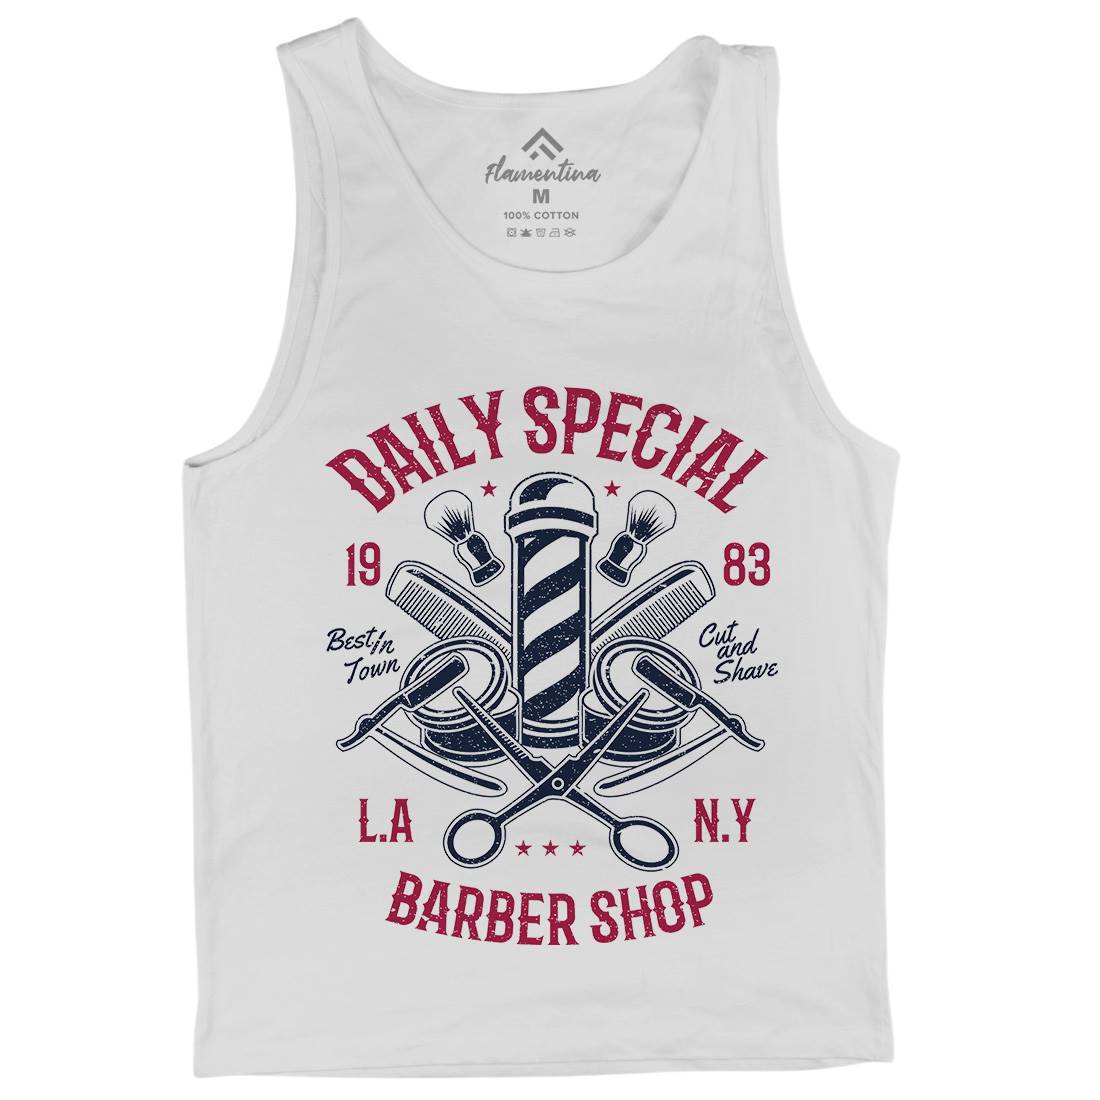 Daily Special Shop Mens Tank Top Vest Barber A041